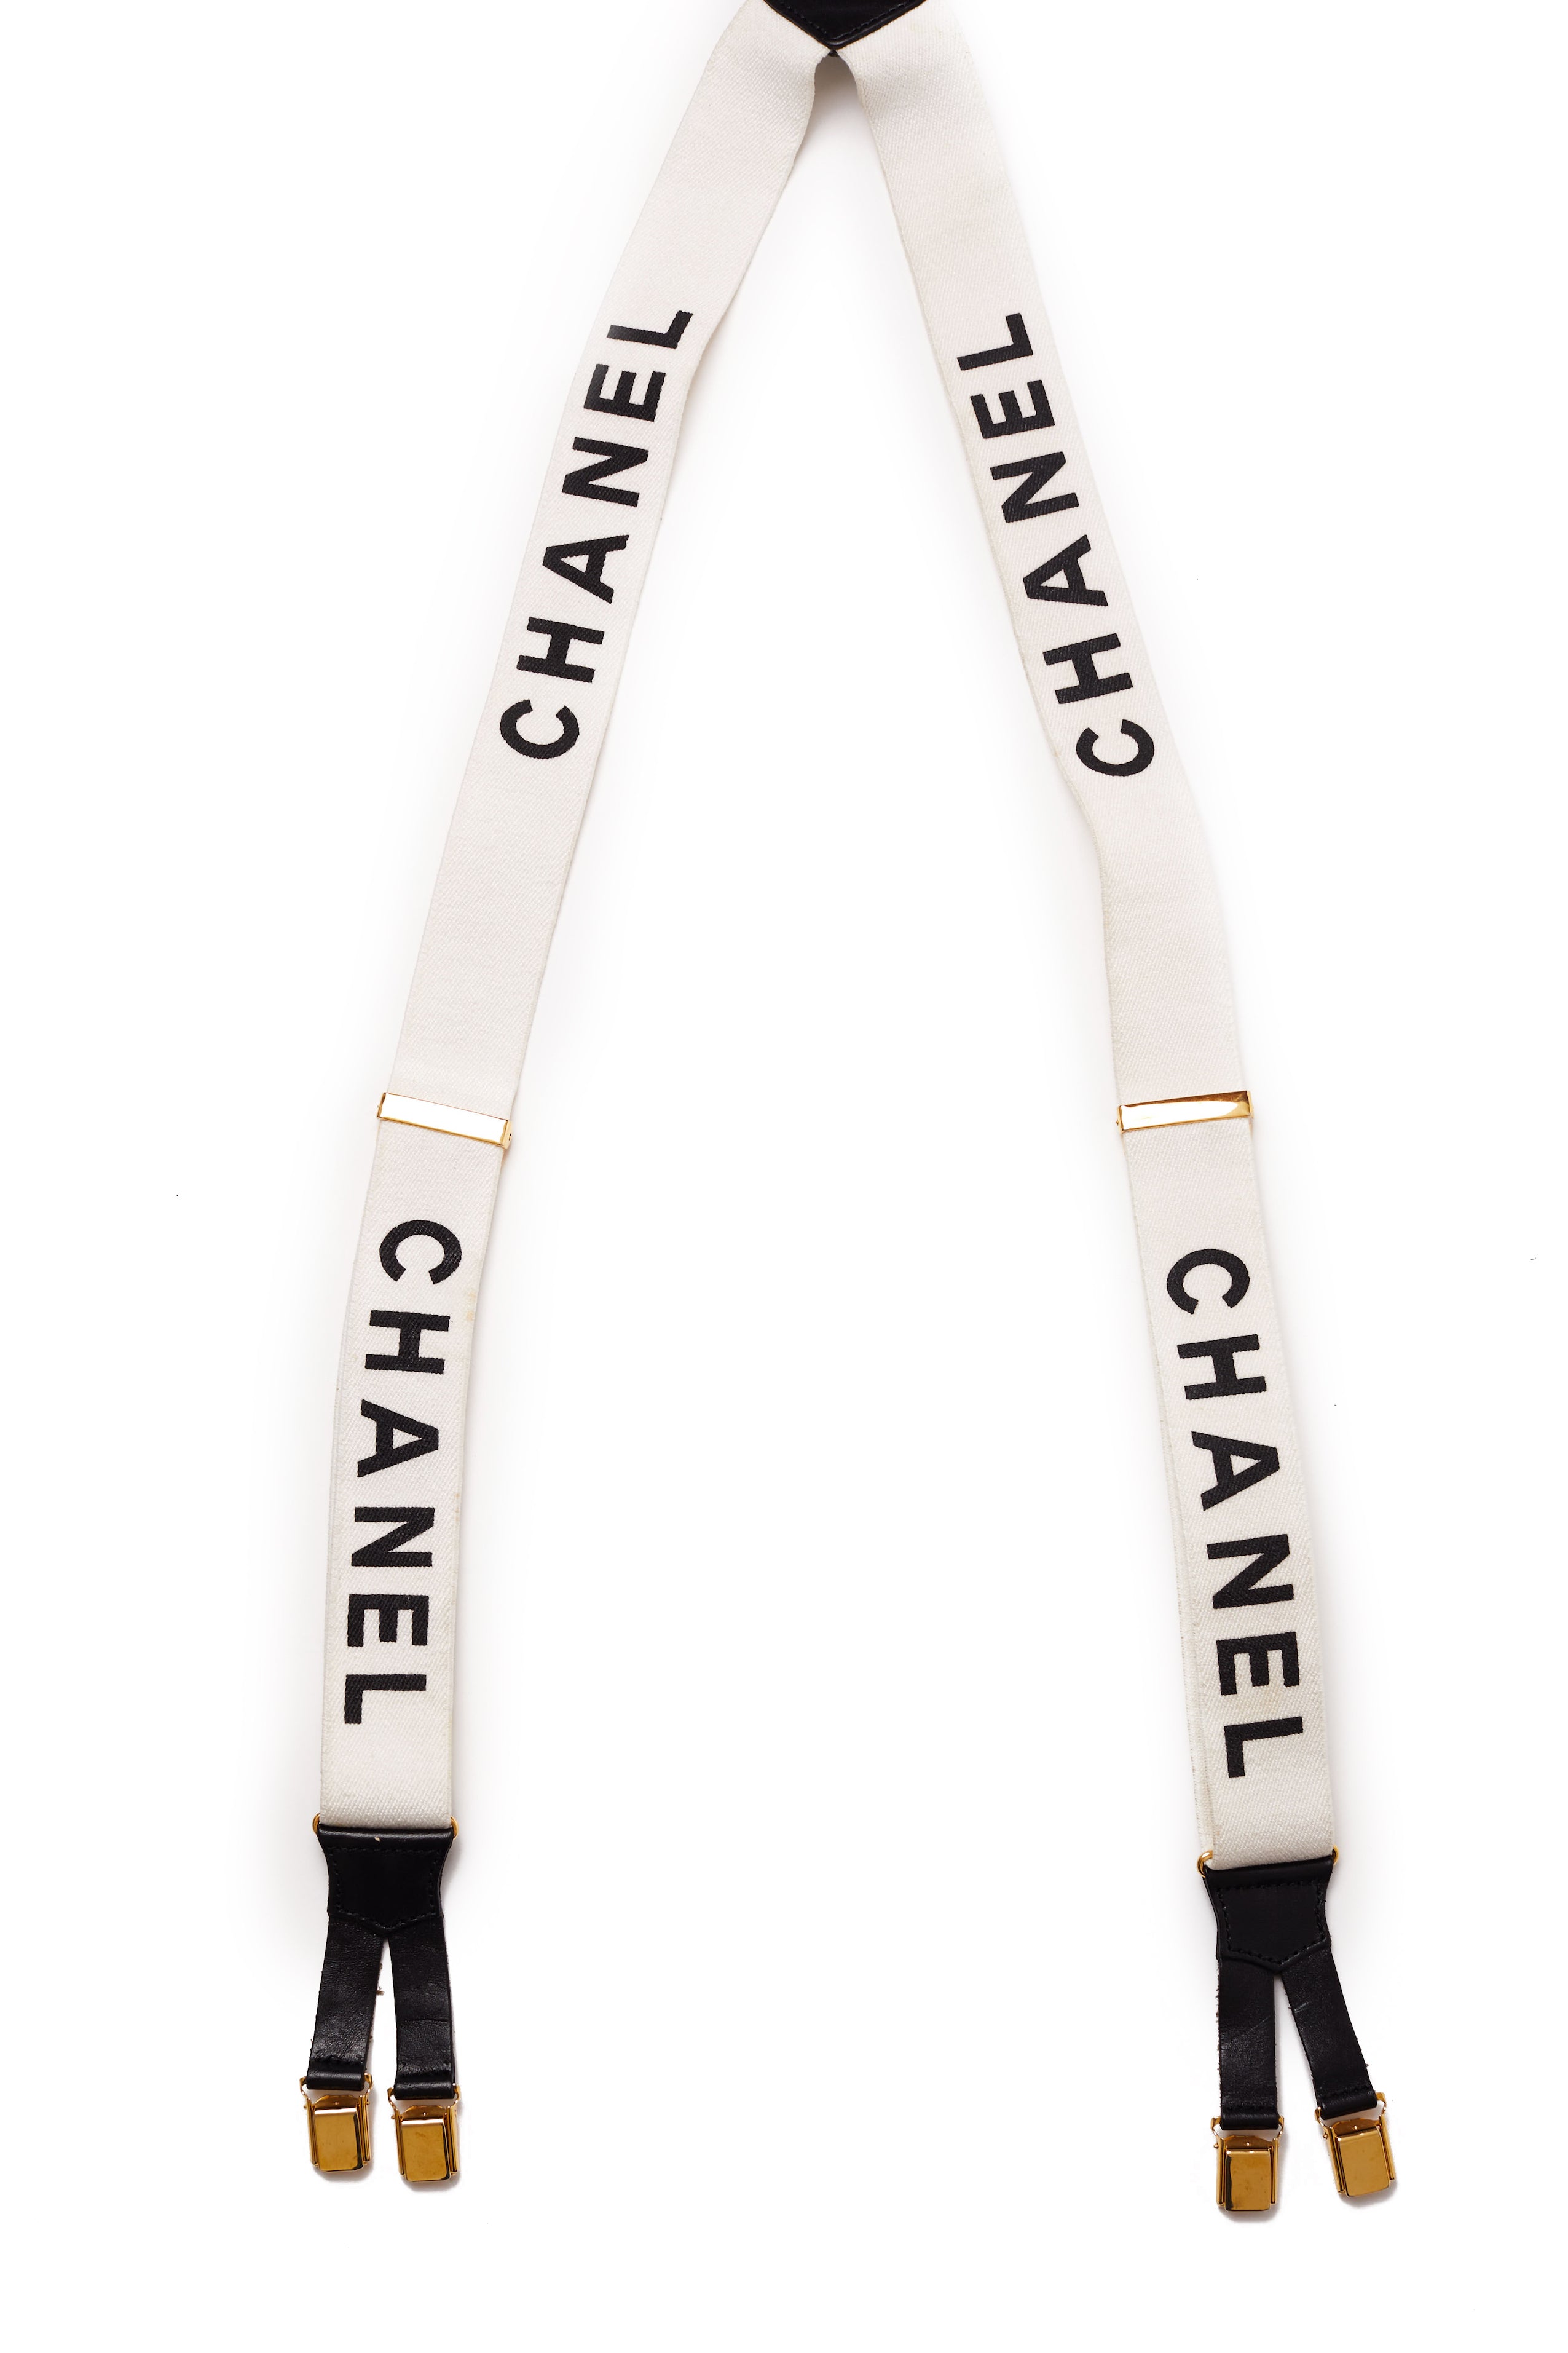 Chanel <br> S/S 1994 runway logo print suspenders